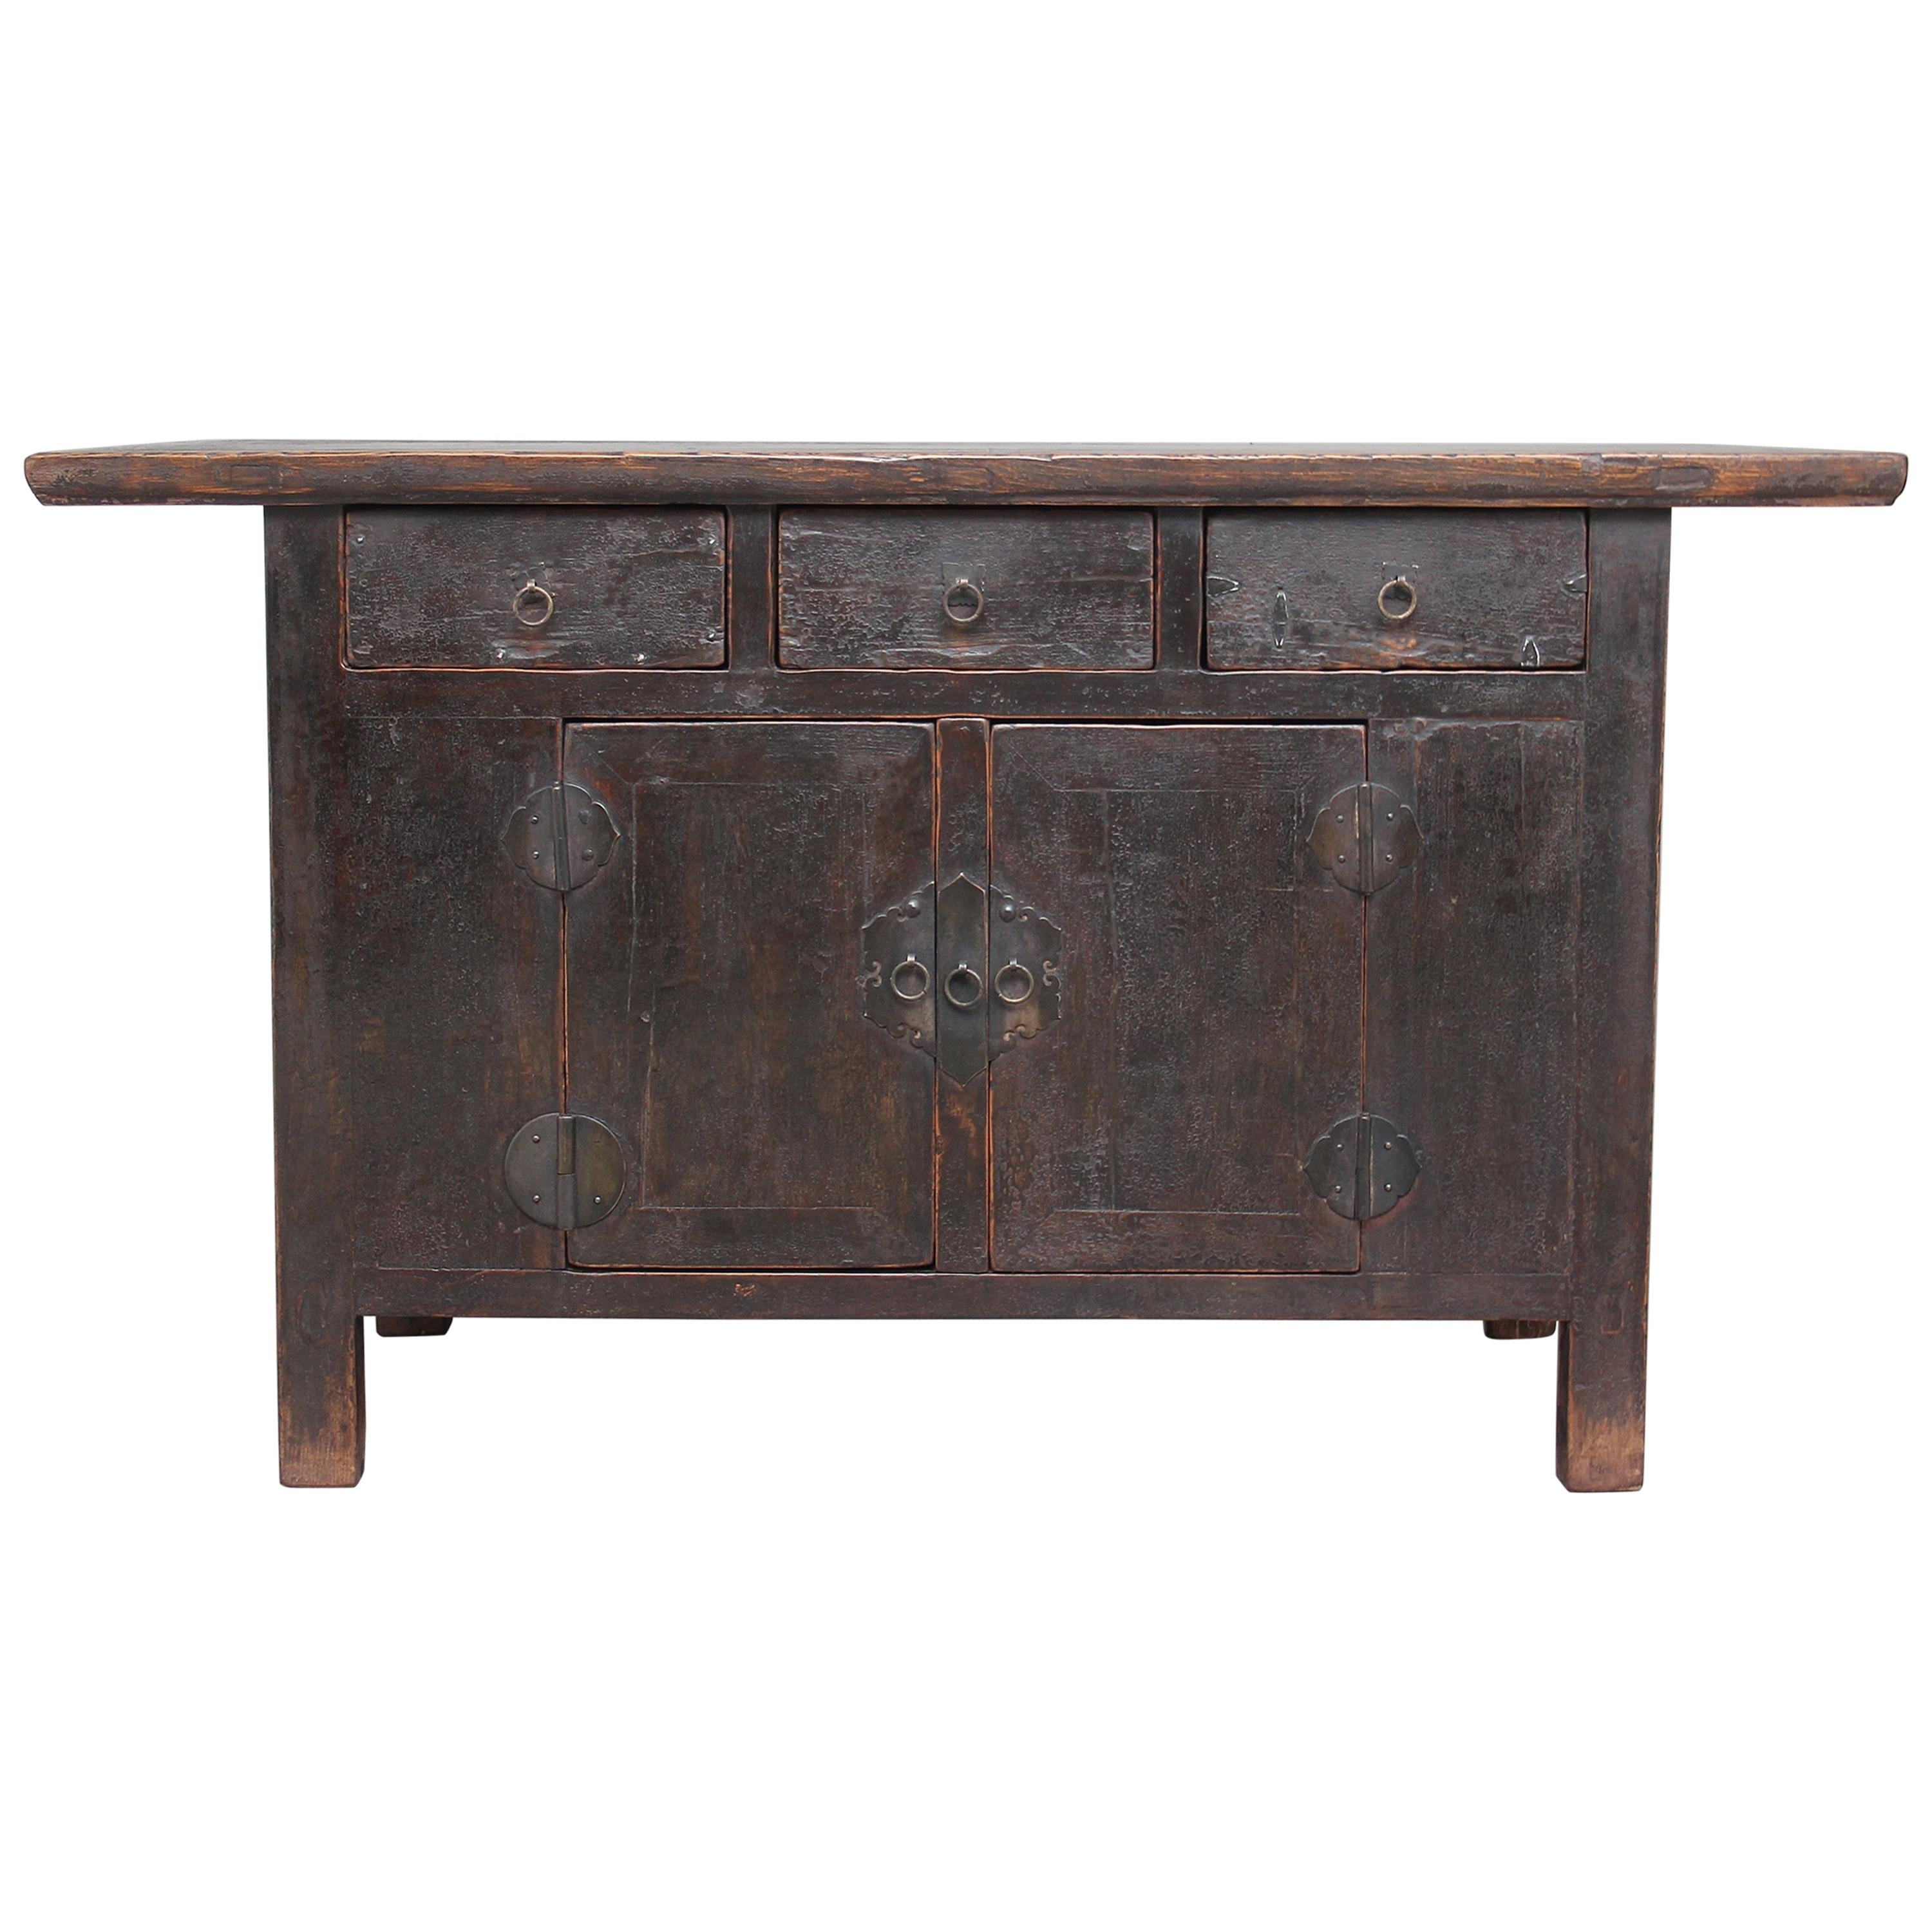 19th Century Chinese Rustic Elm Dresser